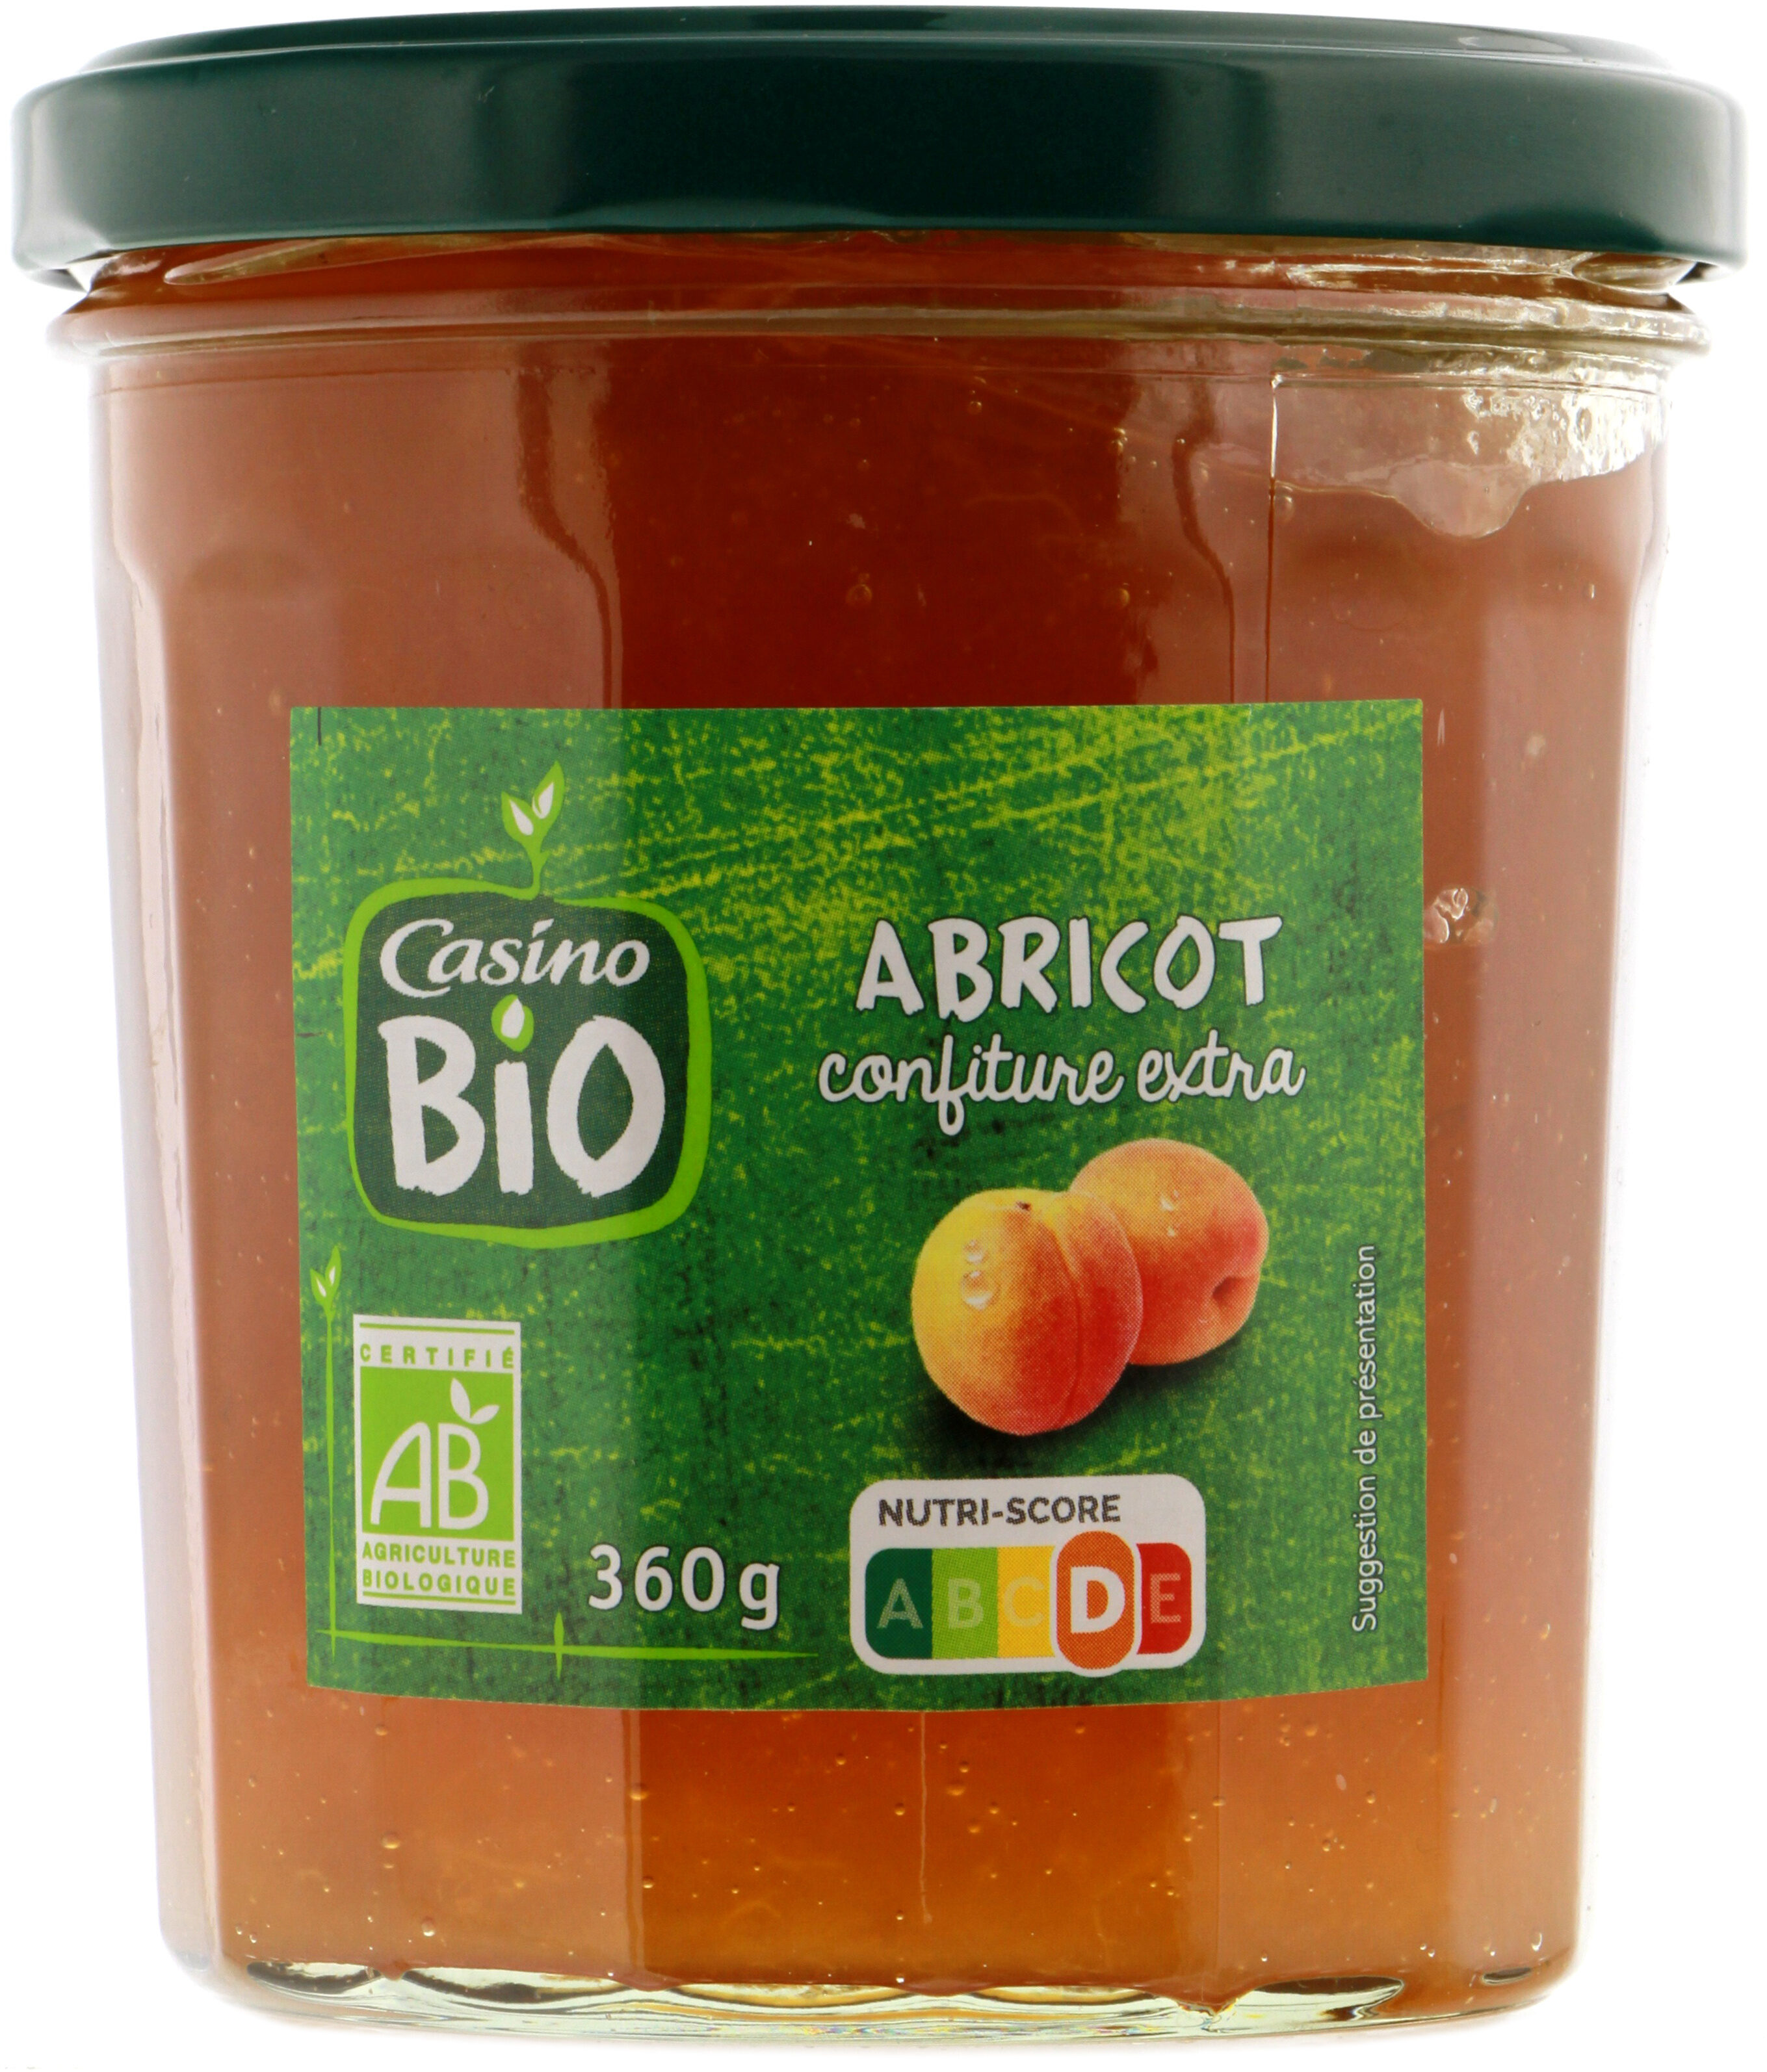 Abricot confiture extra - Produkt - fr